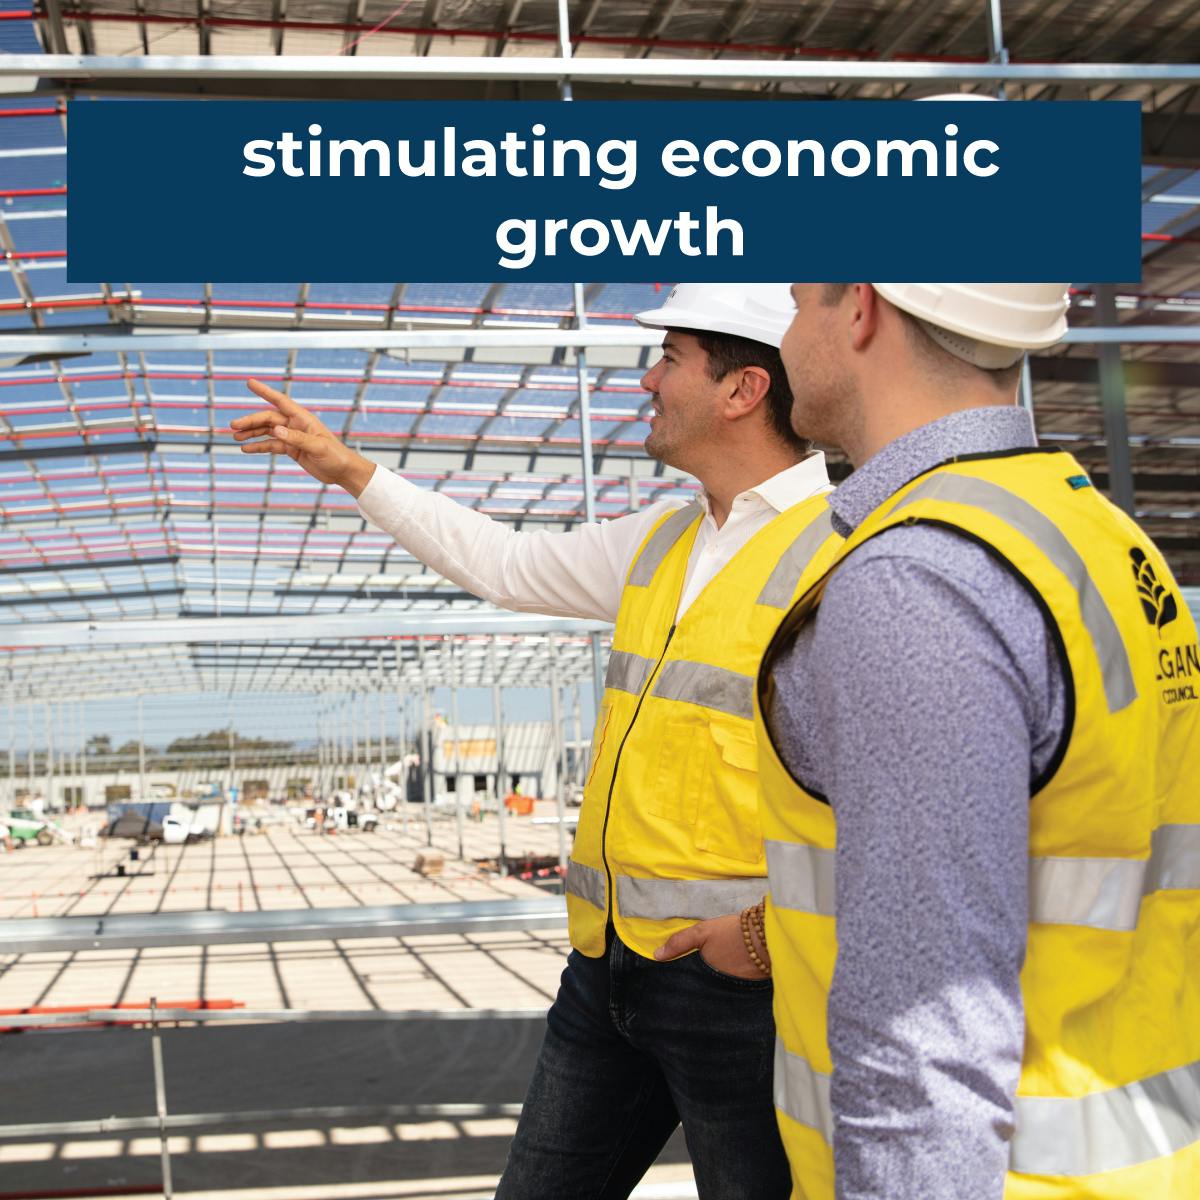 Objective 2 - Stimulating economic growth